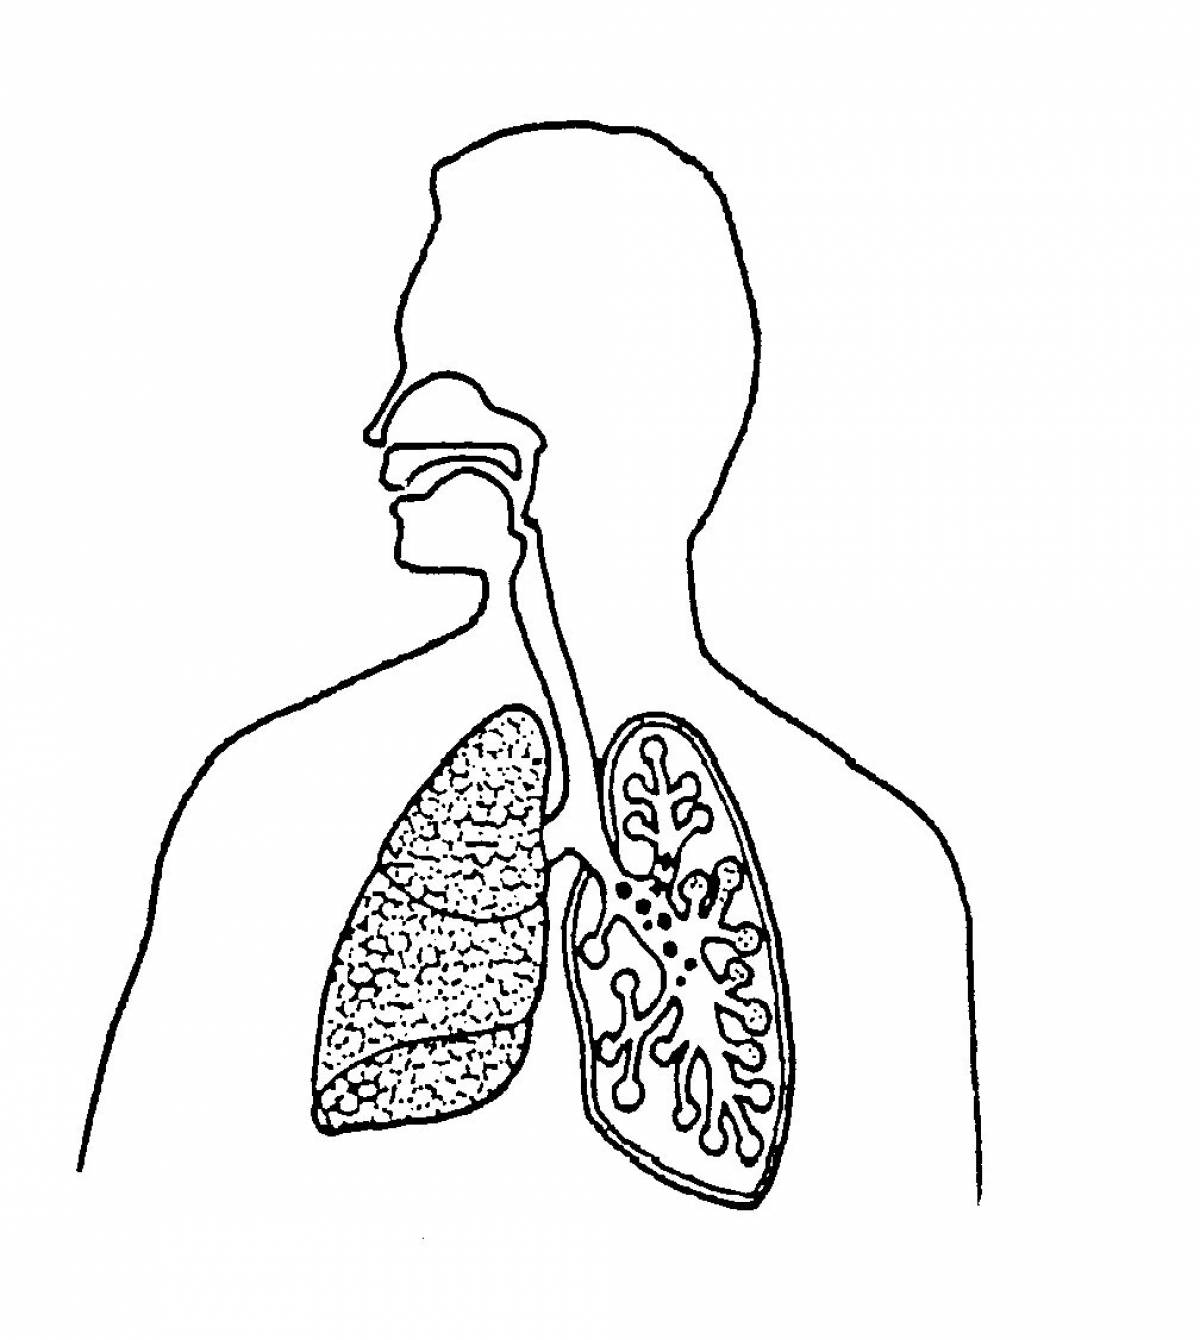 Respiratory system #22